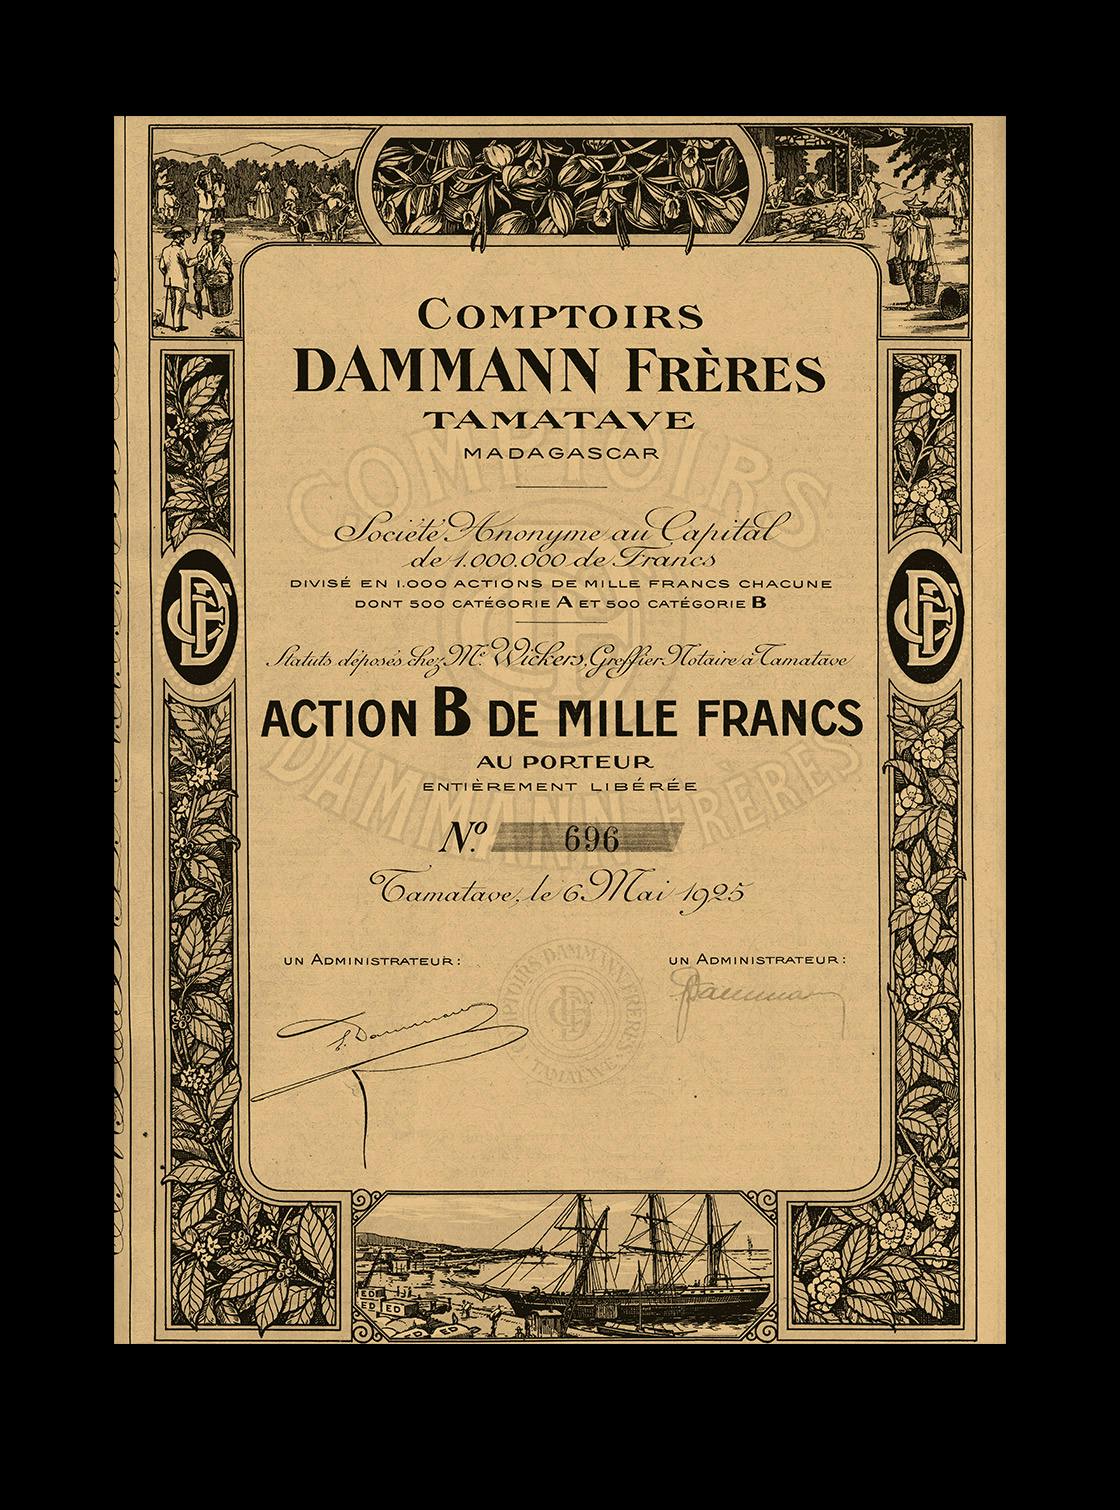 Dammann Frères: France's Oldest Tea Company - Page 2 of 2 - TeaTime Magazine